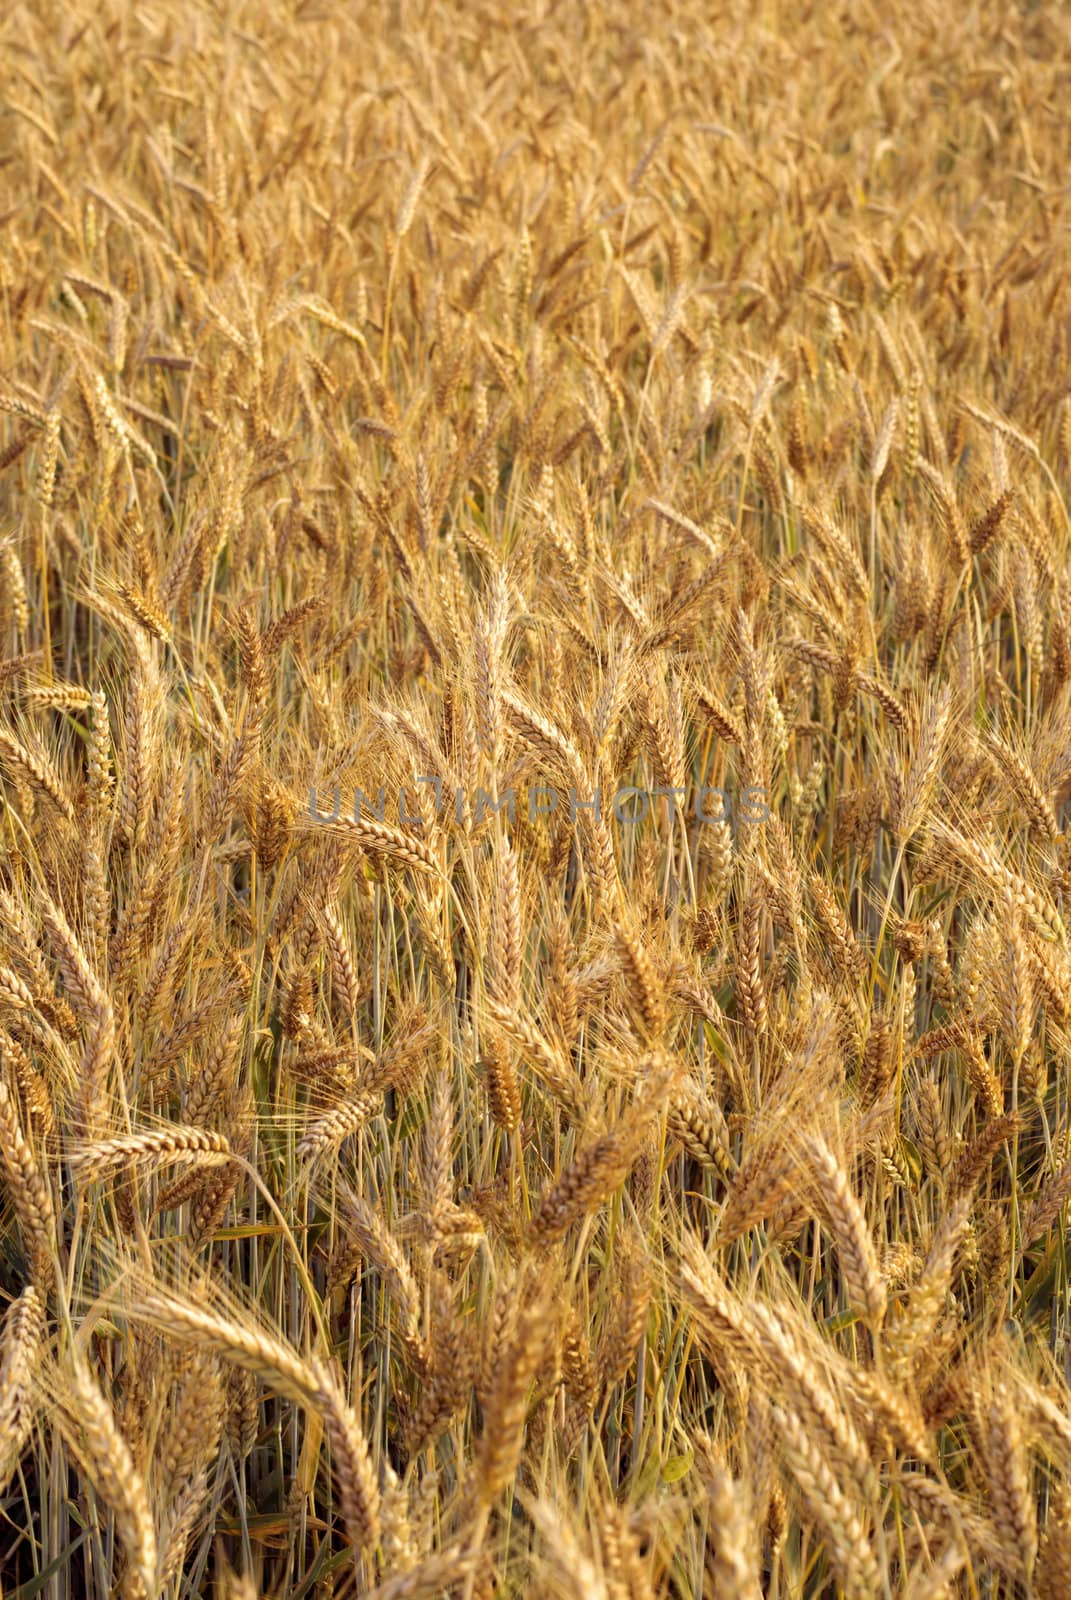 Triticale cultivation (hybrid of wheat and rye). Adobe RGB (1998).